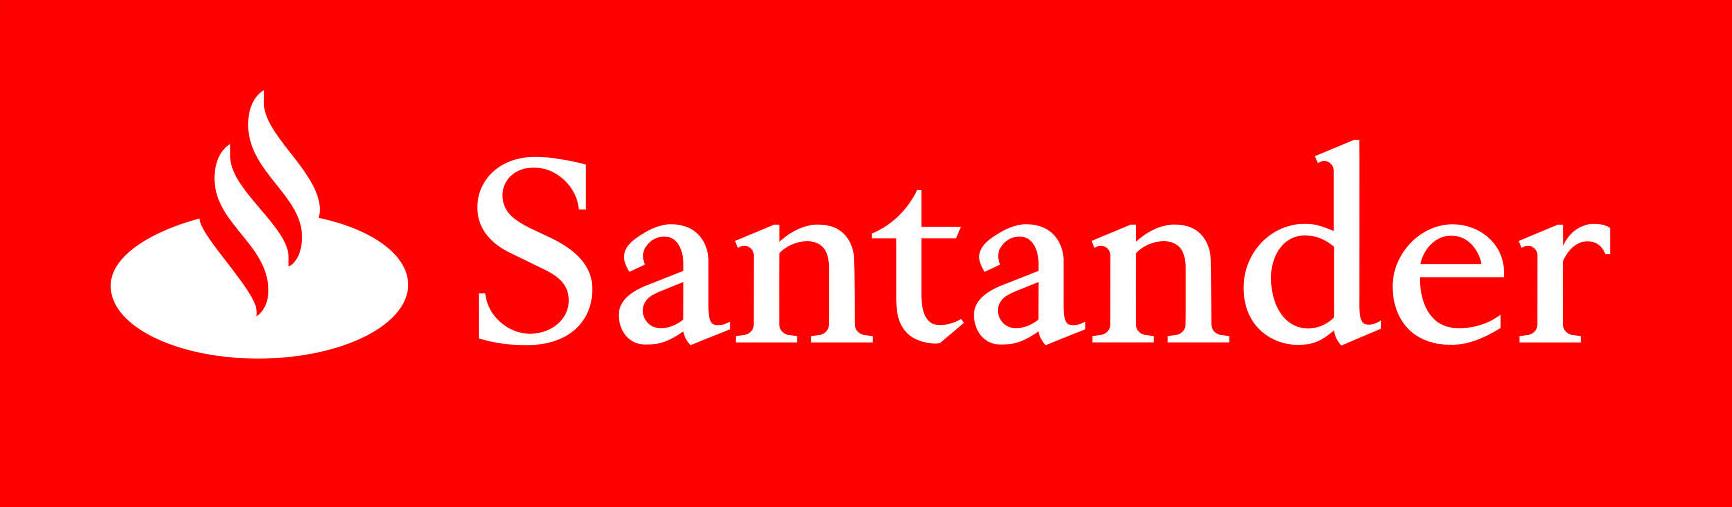 Programa de Estágio Banco Santander 2014 – Como Se Inscrever, Requisitos, Benefícios